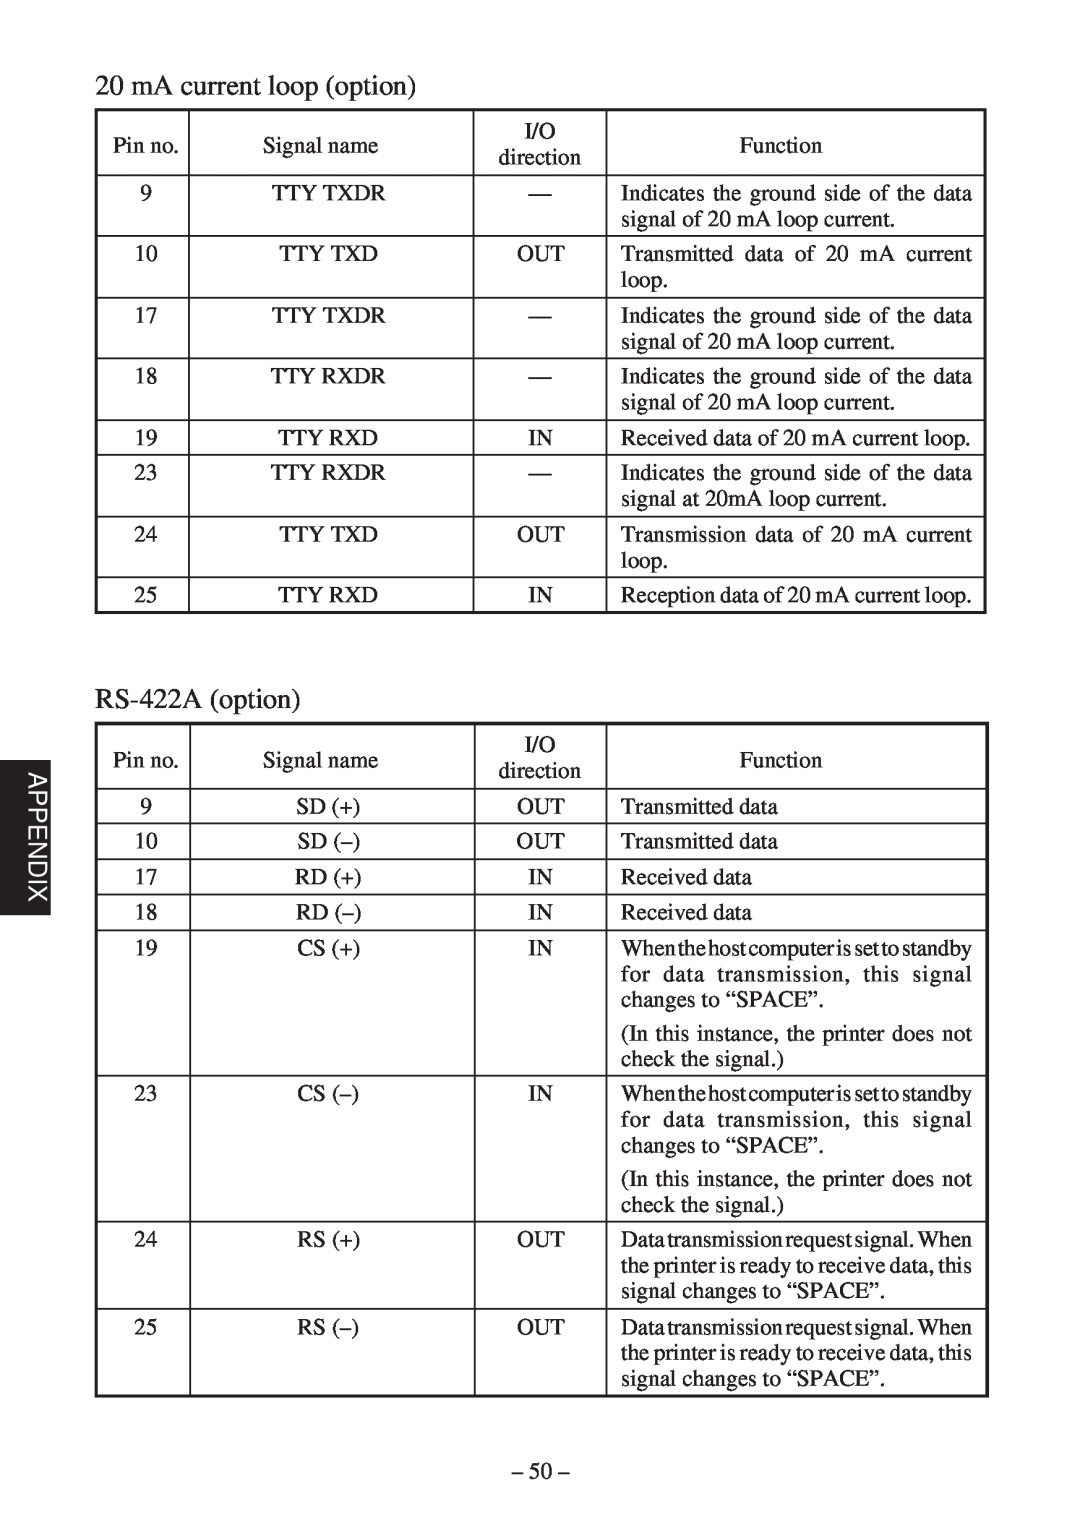 Star Micronics SP312F, SP342F-A manual mA current loop option, RS-422A option, Appendix 